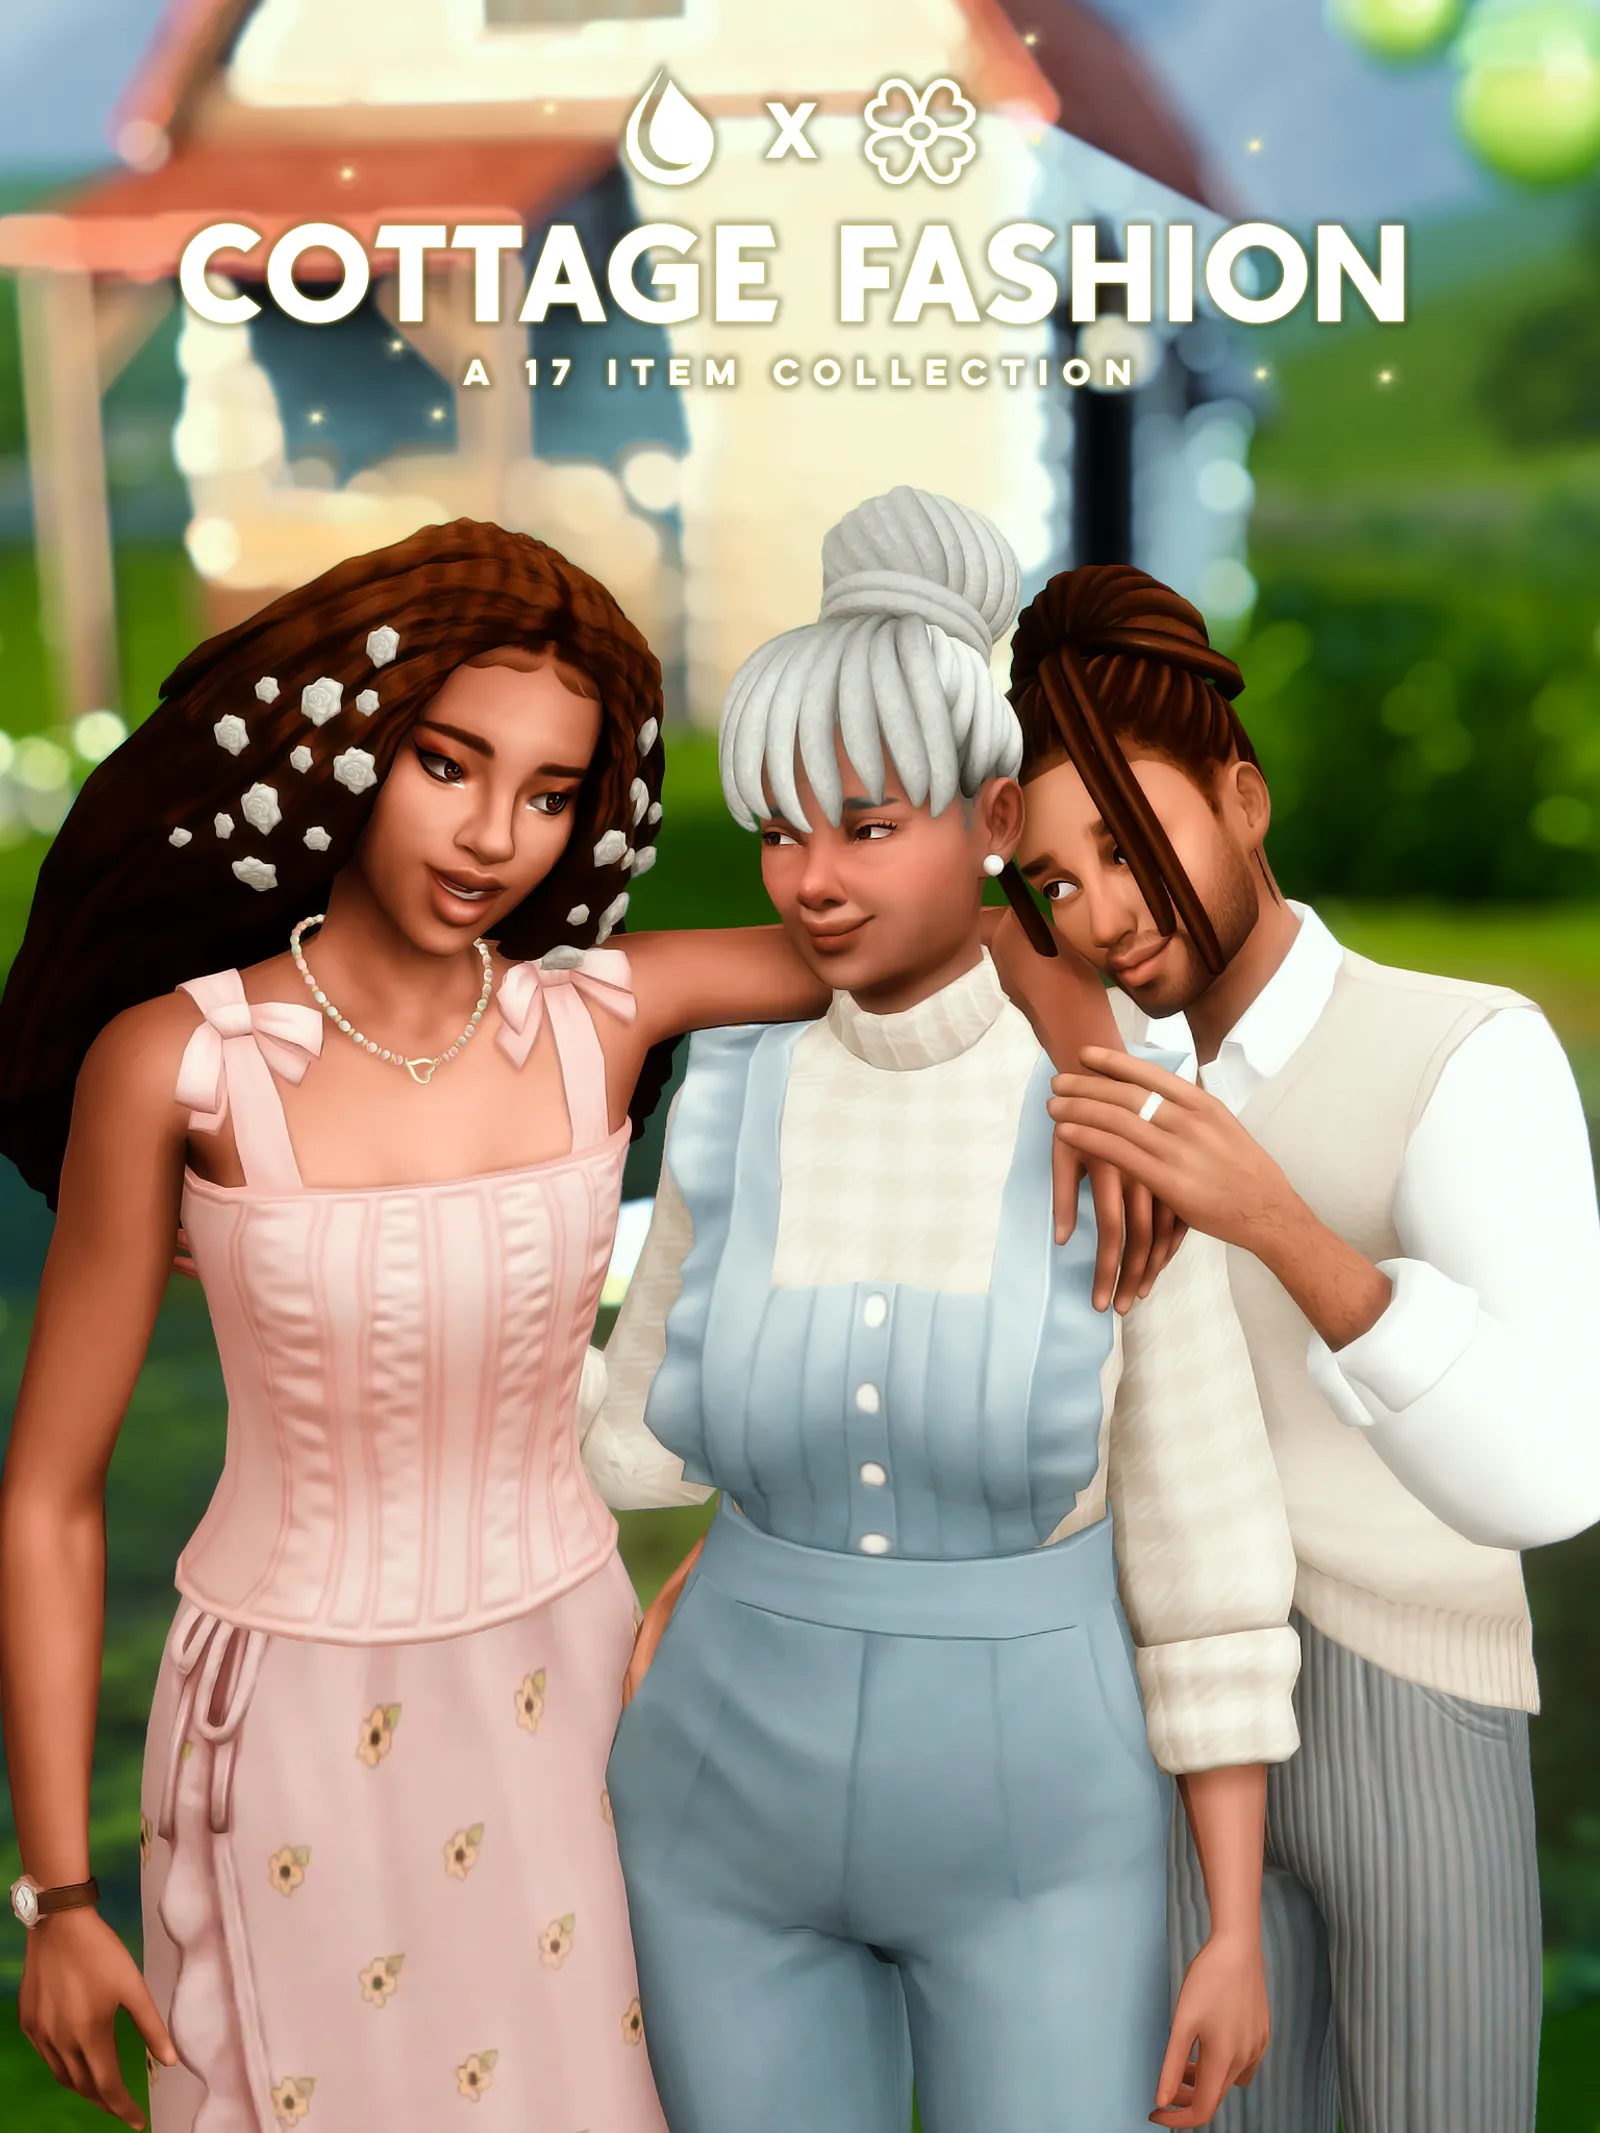 SxS Cottage Fashion